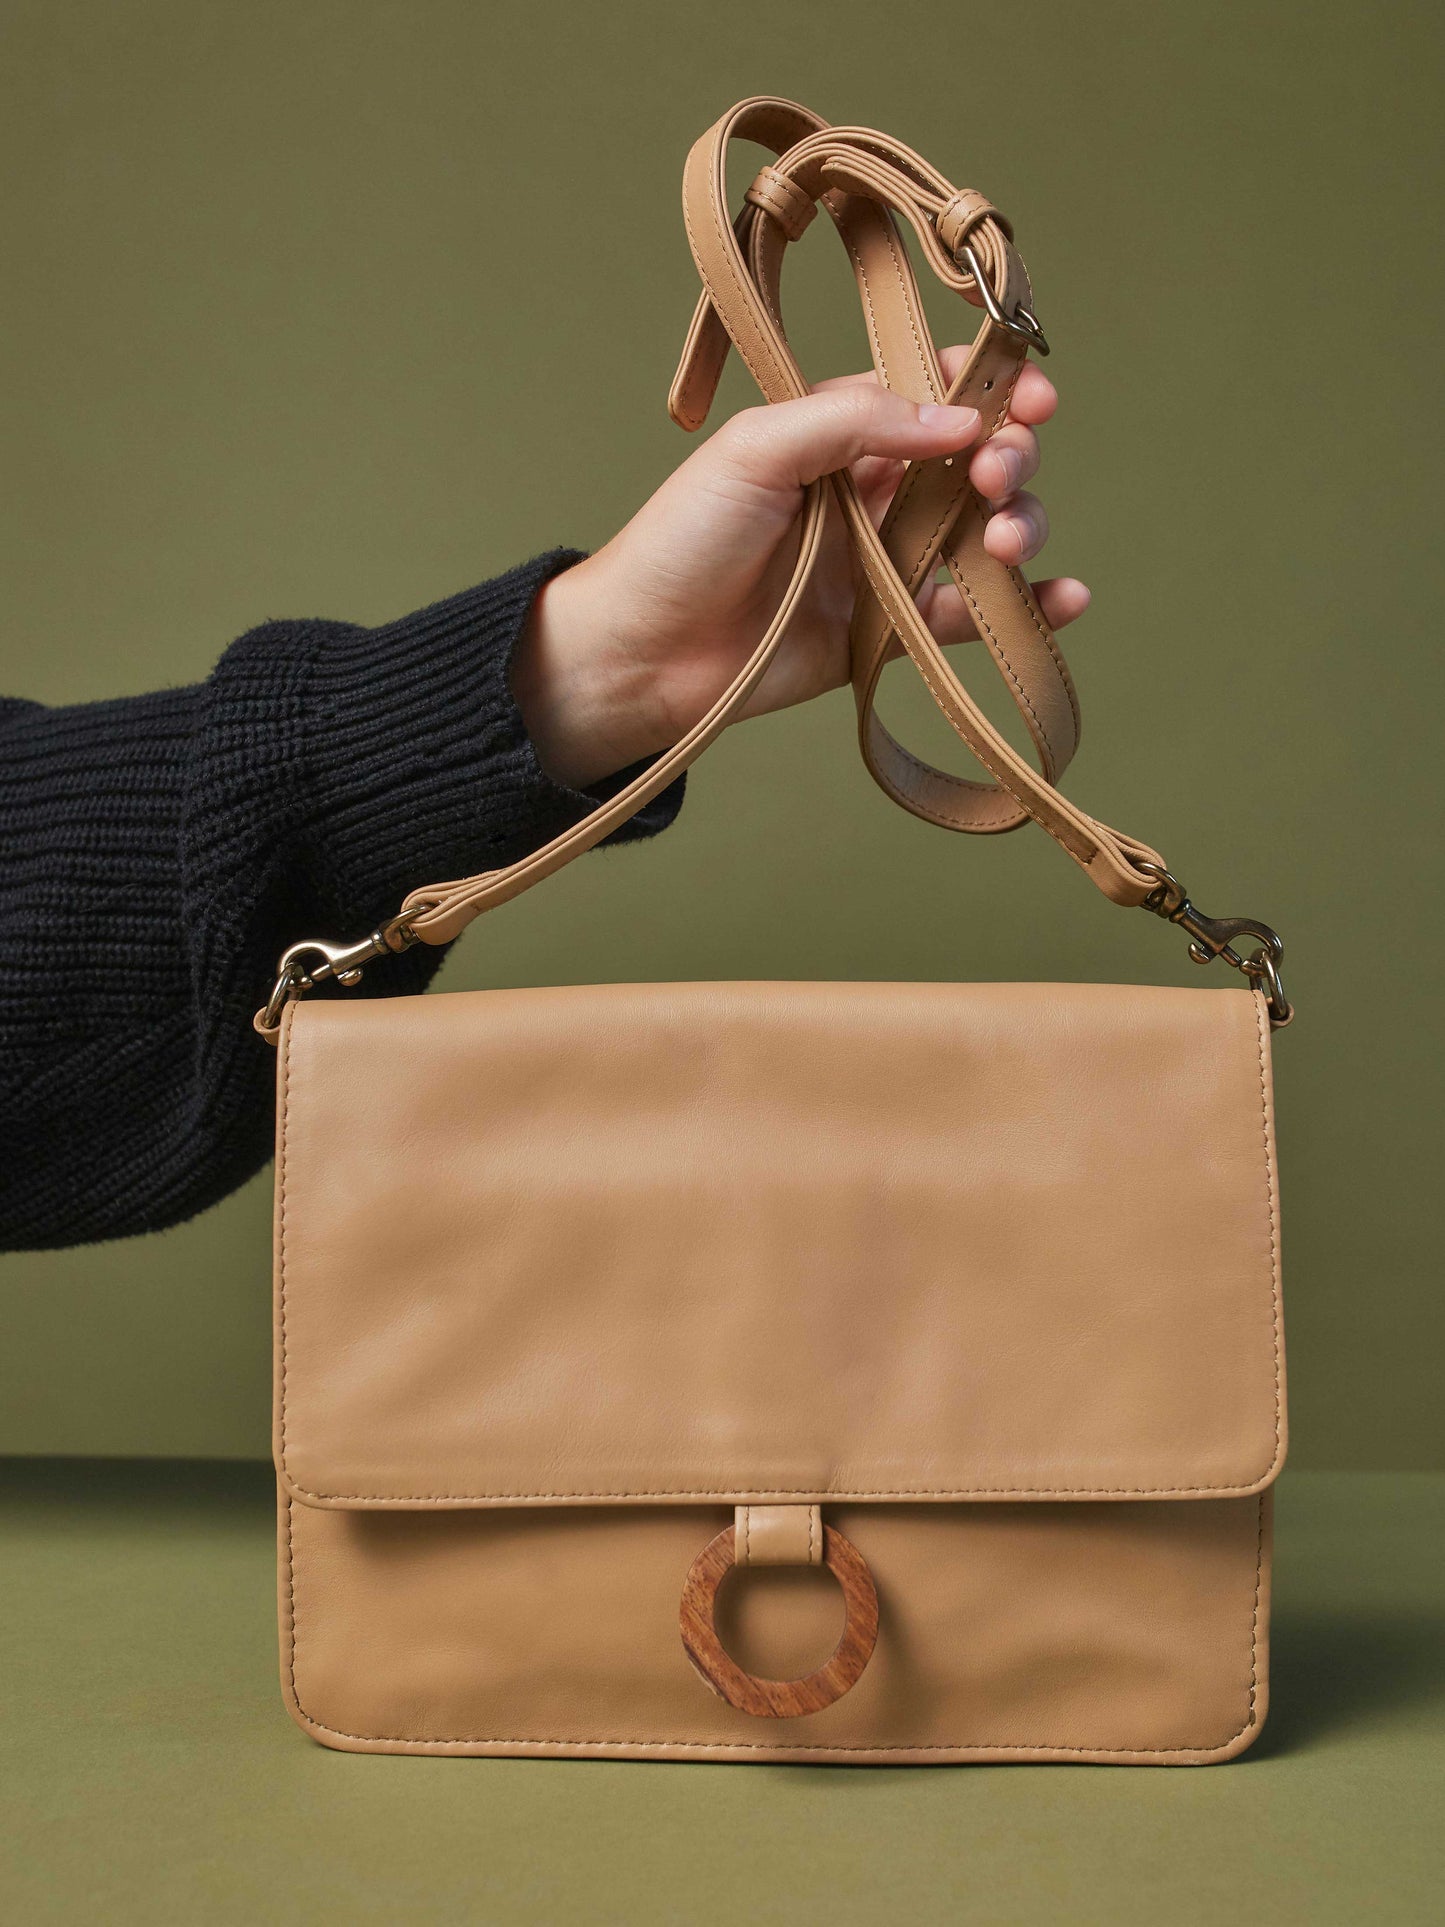 Model holding strap of Leather-wallet crossbody bag - Wood Wallet Crossbody cappuccino color handbags by payton james Nashville leather handbag designer